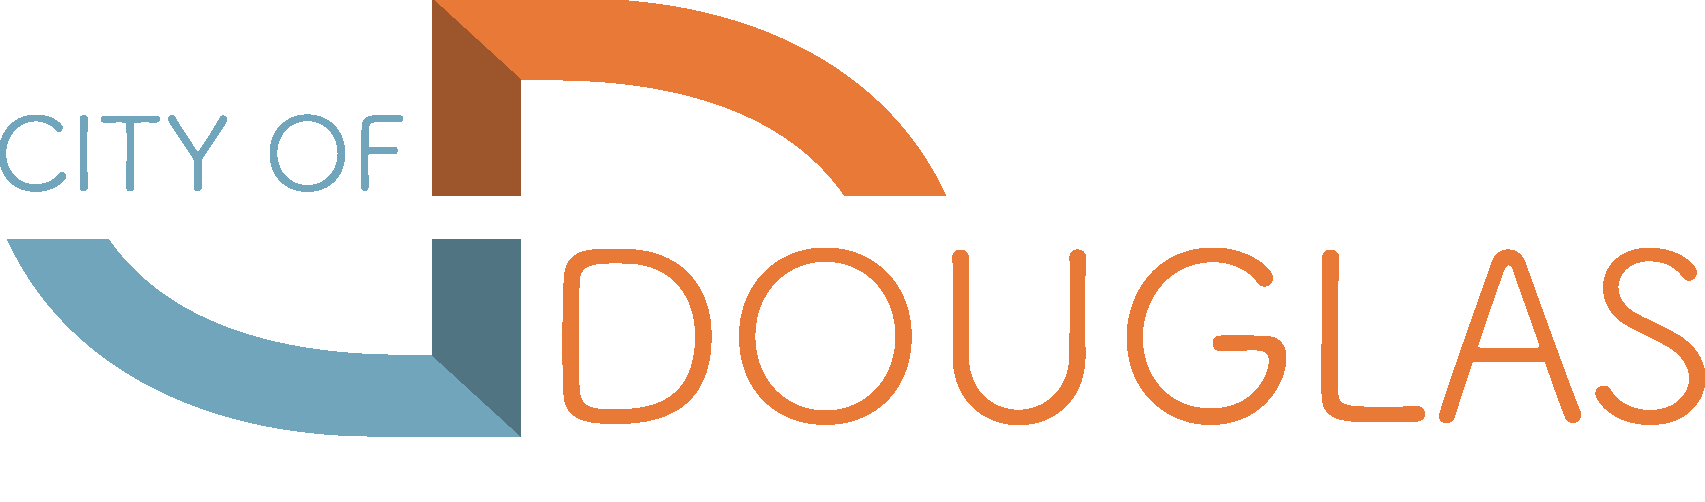 Douglas, AZ Logo